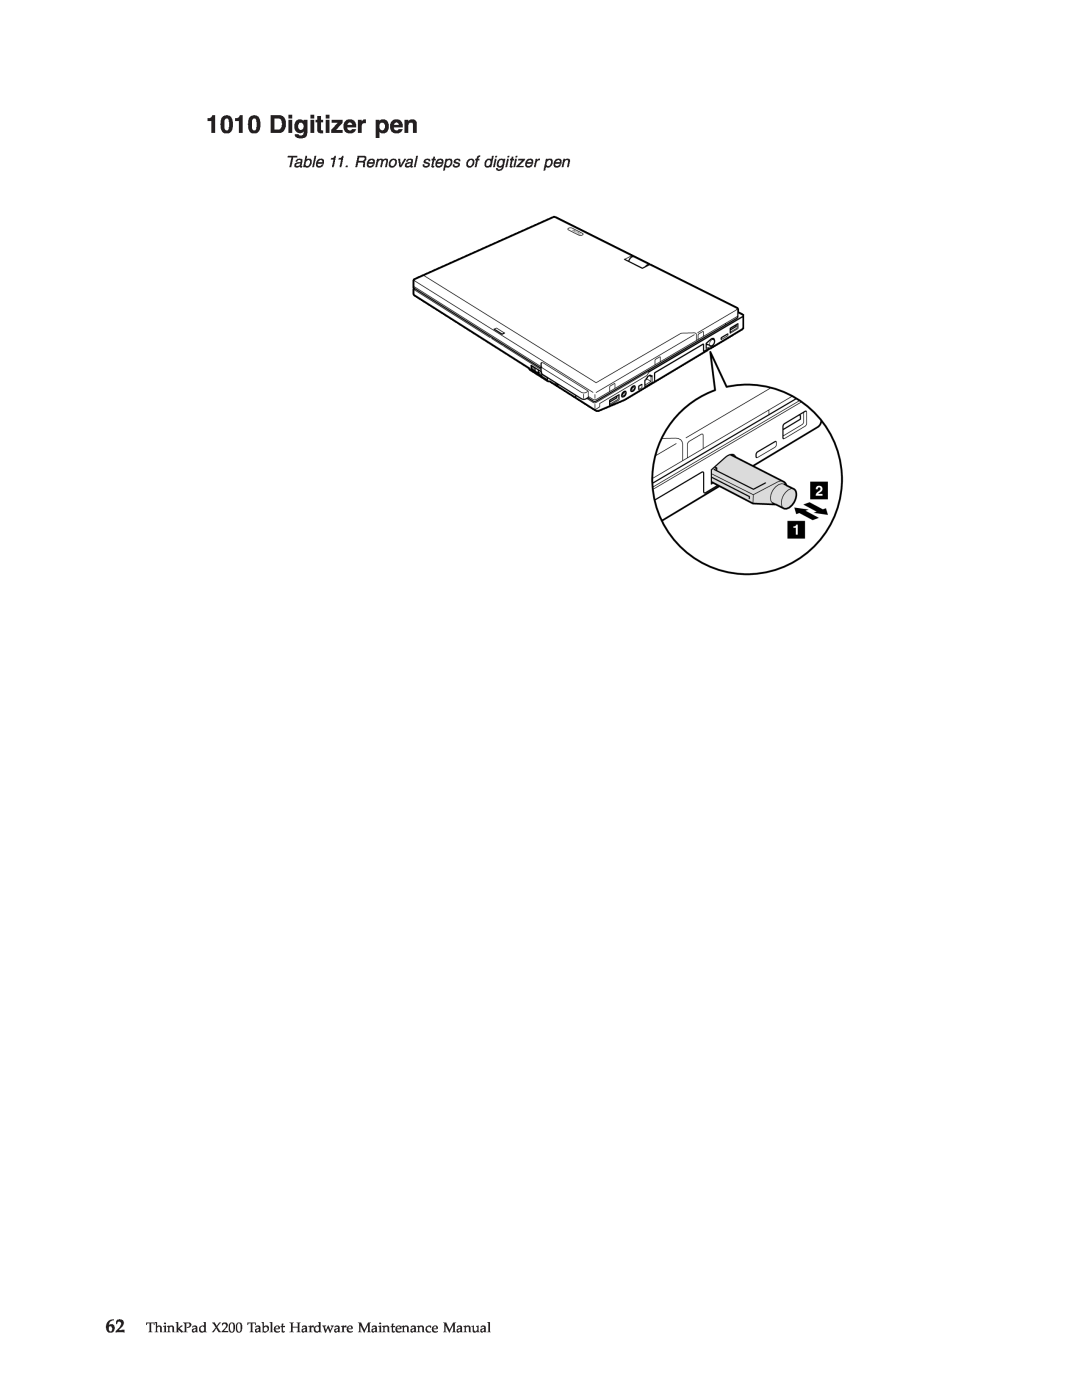 Lenovo X200 manual Digitizer pen, Removal steps of digitizer pen 